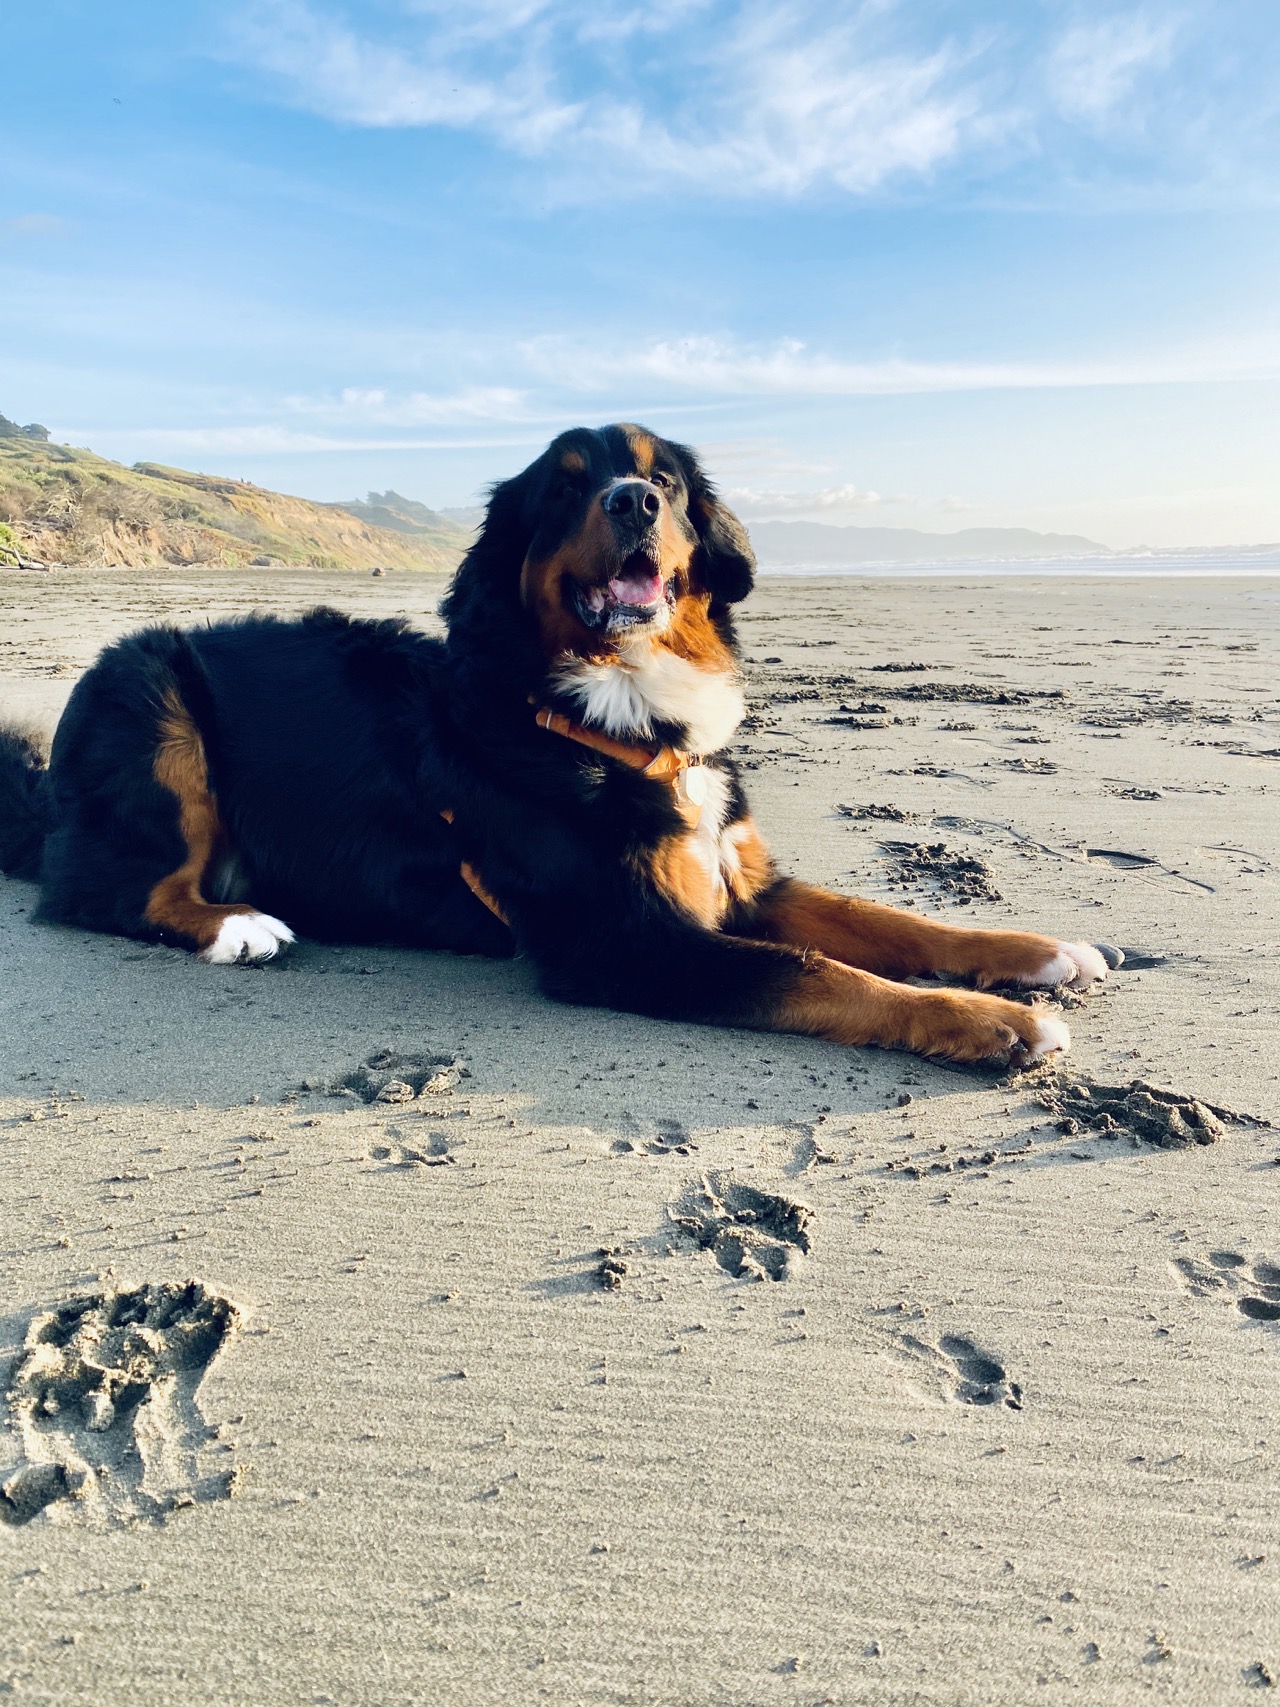 Lyra on her beach